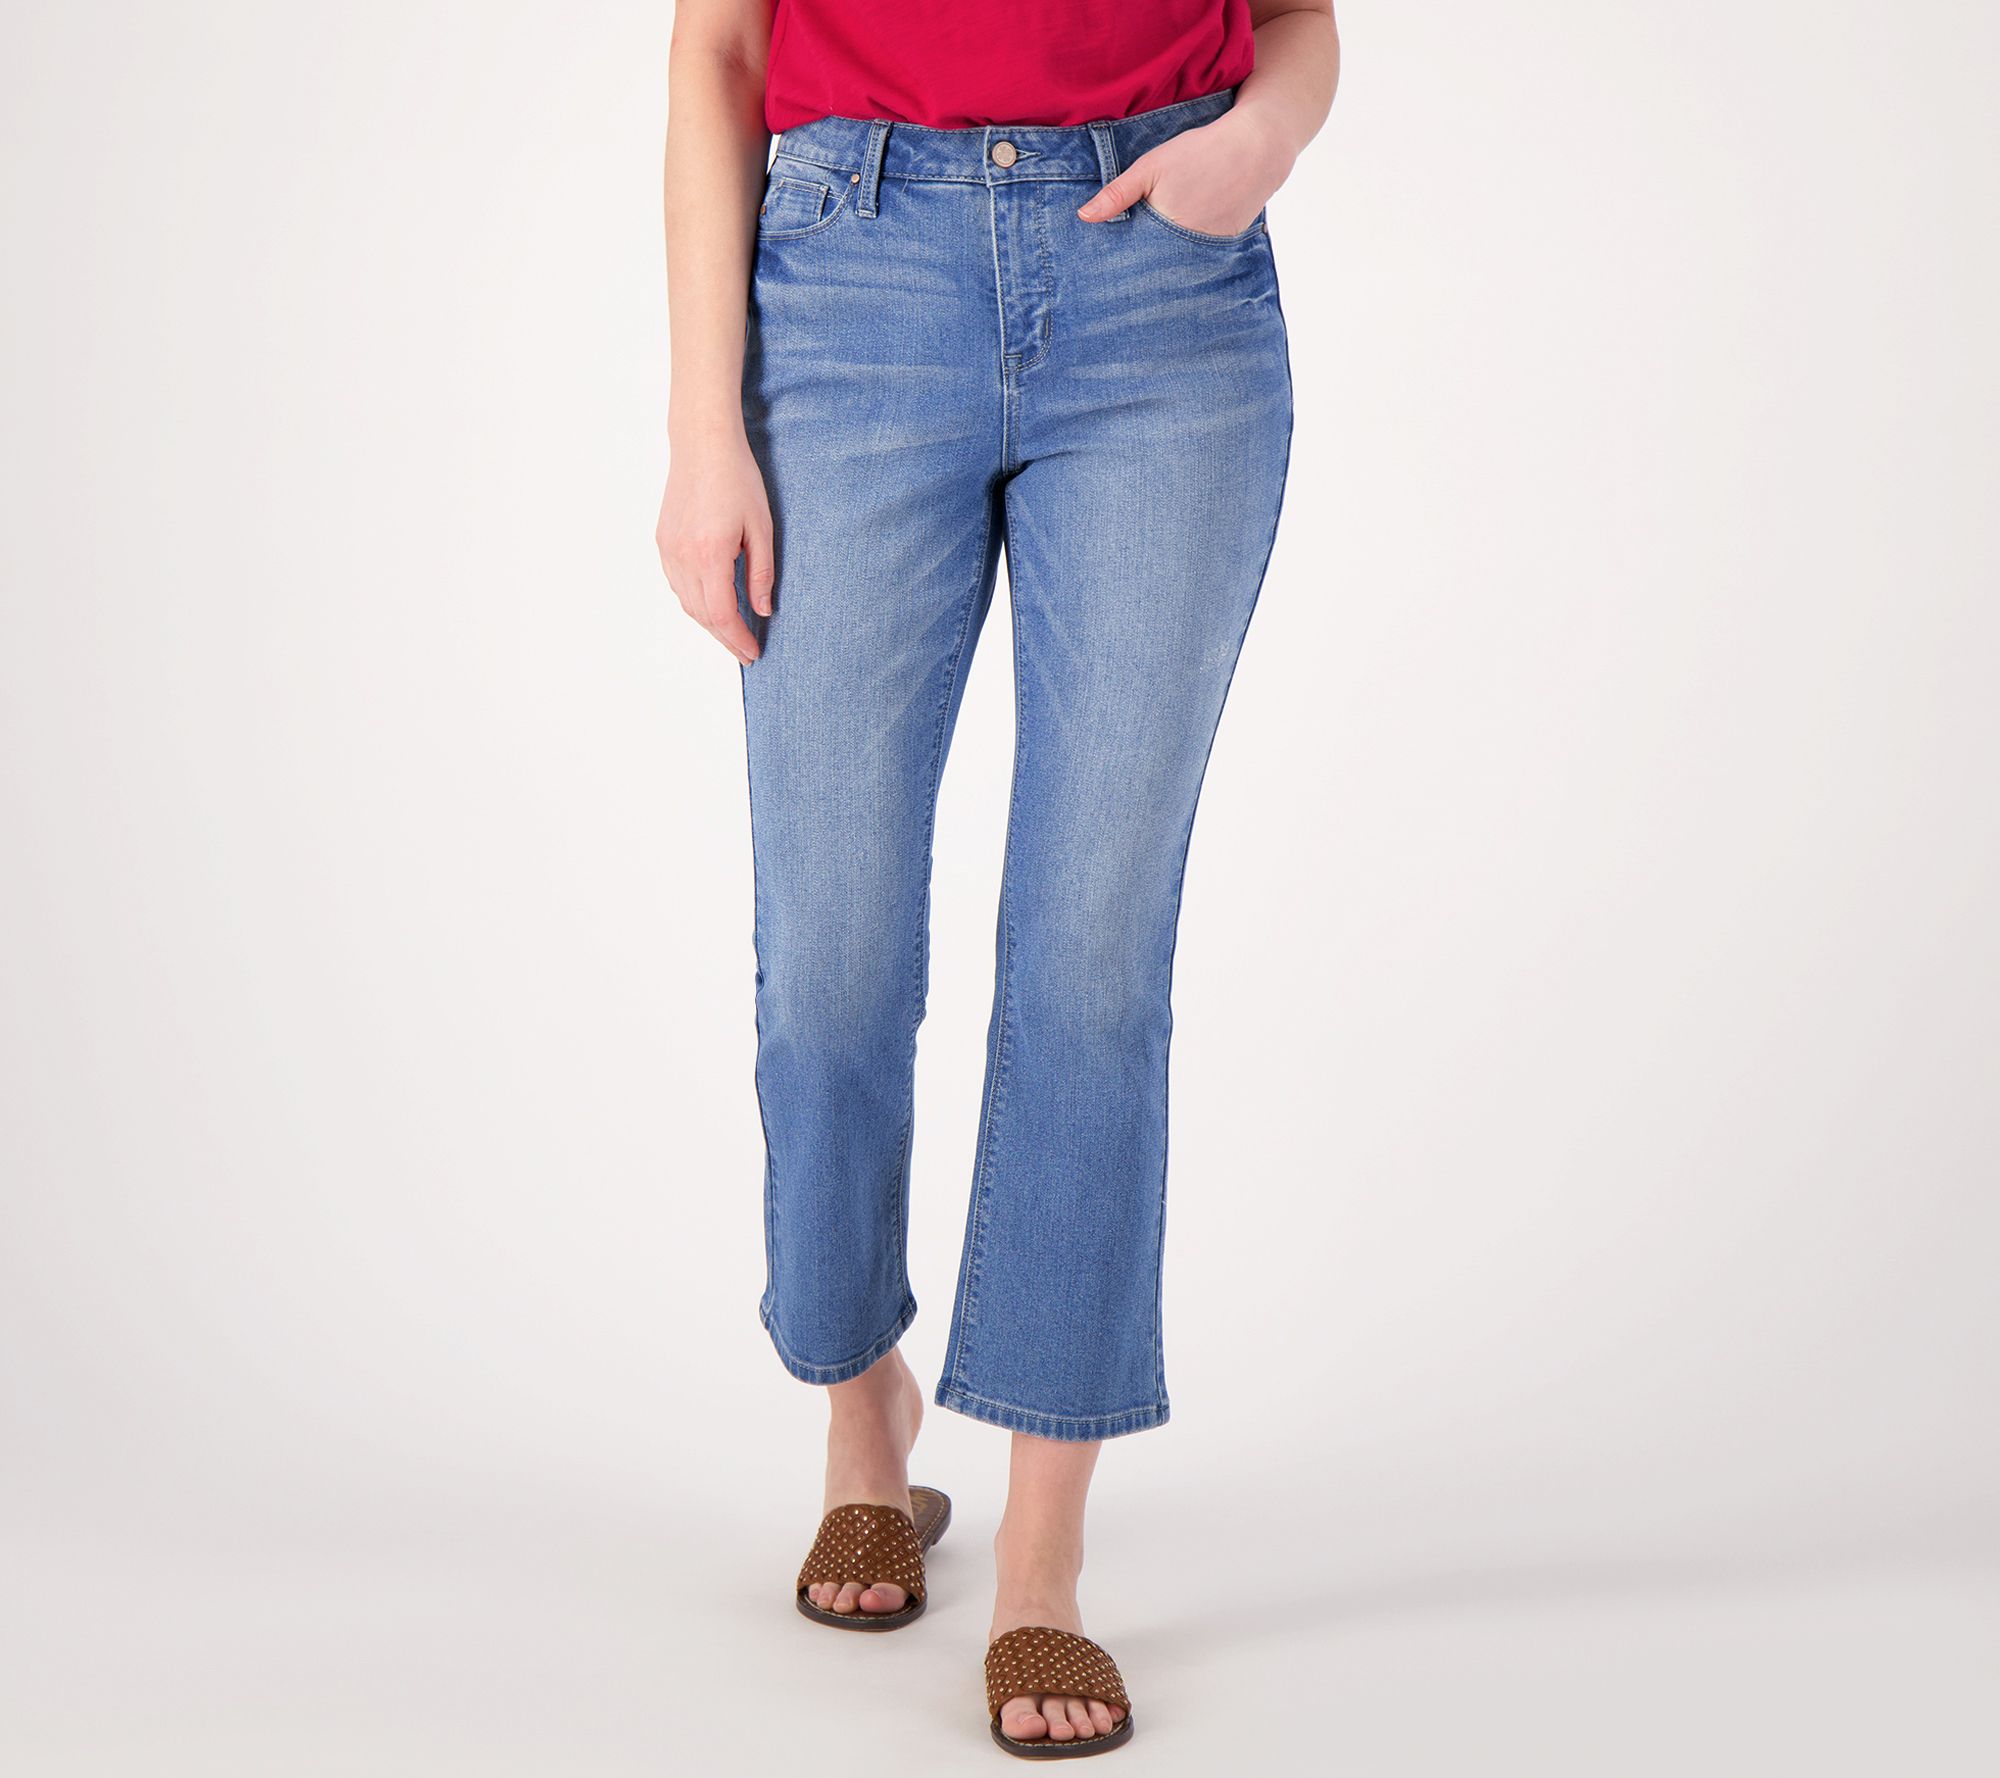 Laurie Felt Forever Denim 5-Pocket Crop Baby Bell Jeans - QVC.com